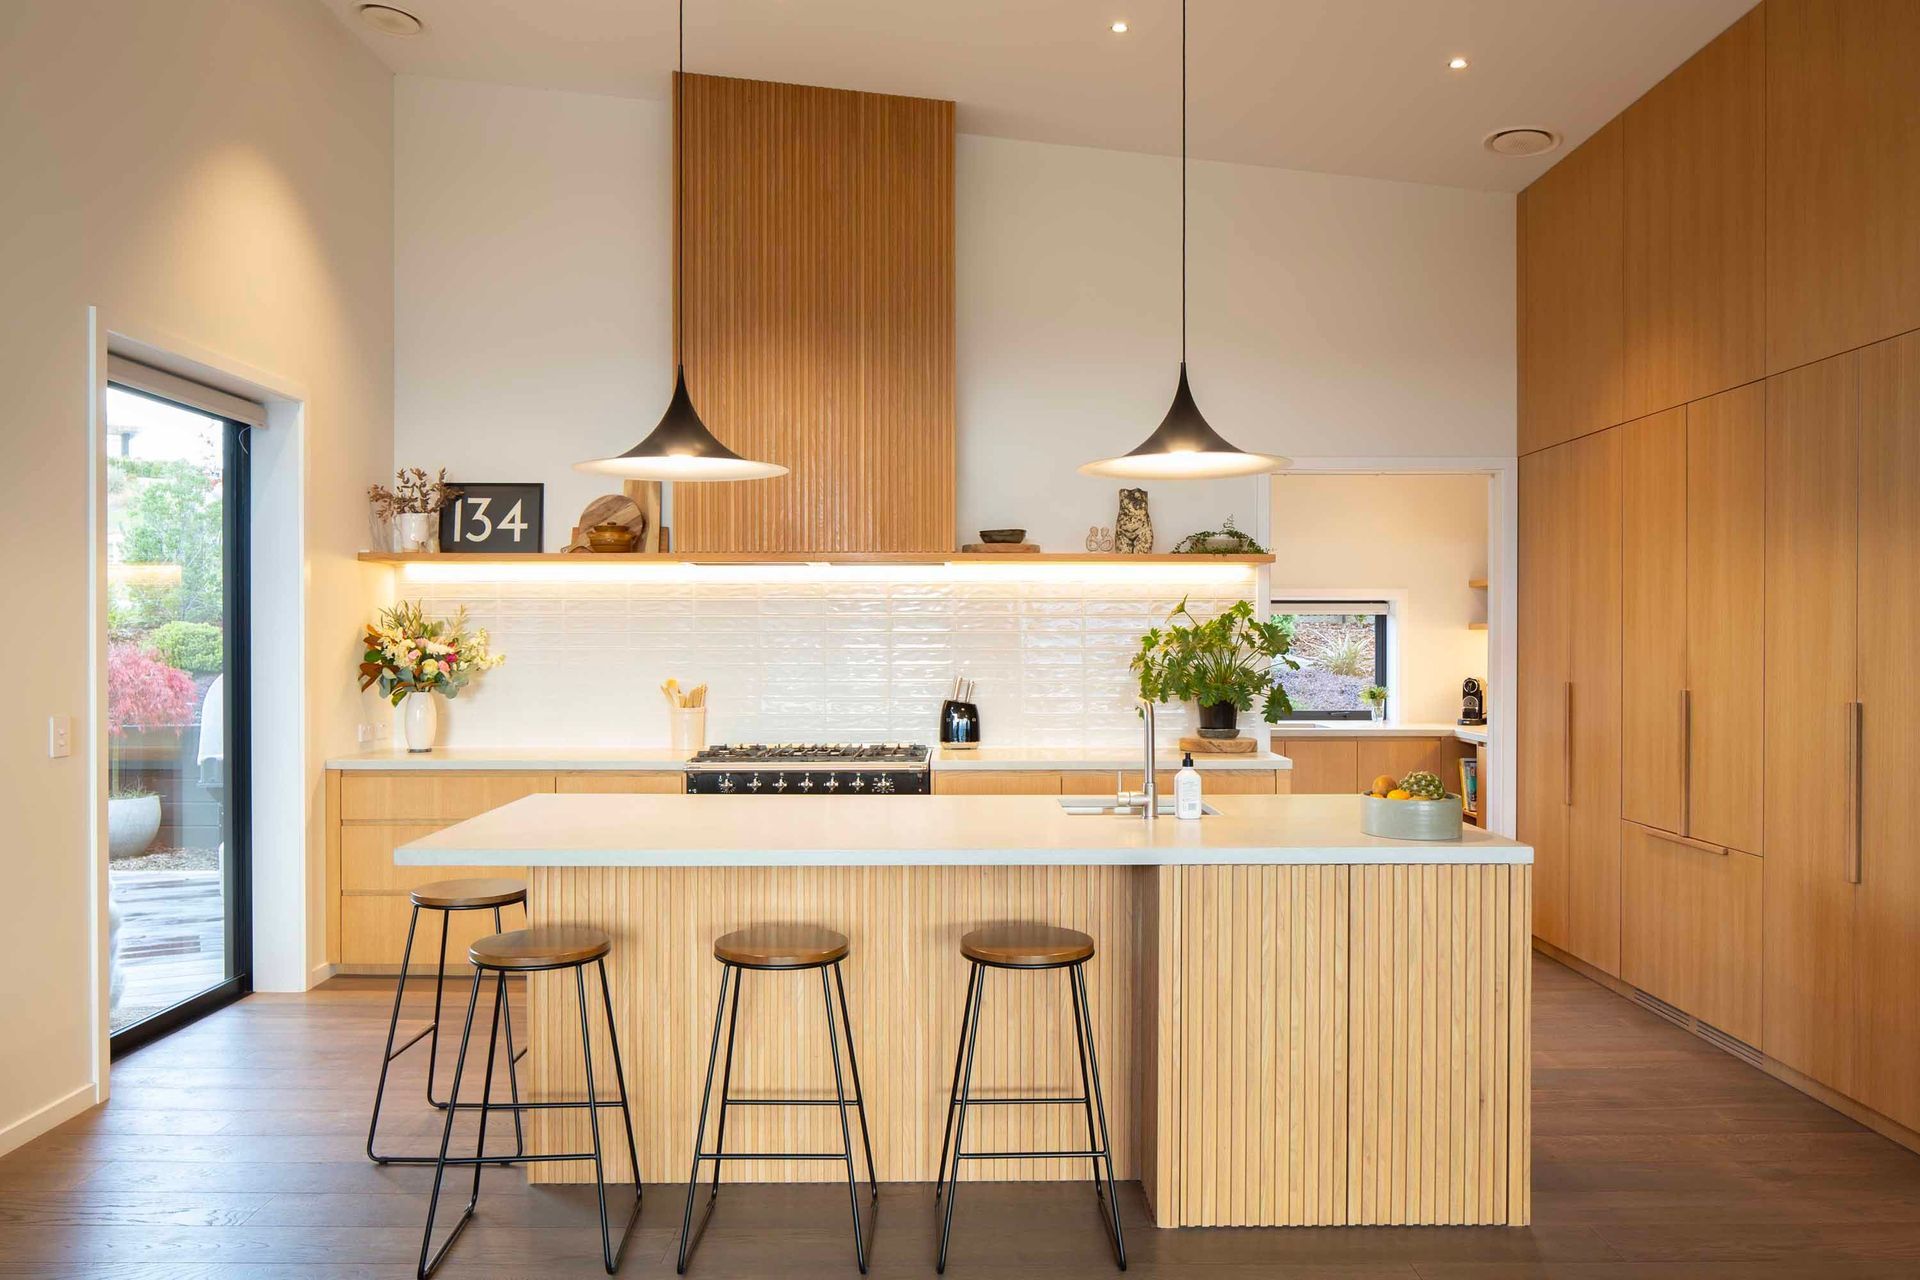 Kitchen-with-Warm-wood-tones-and-white-tile-splashback.jpg